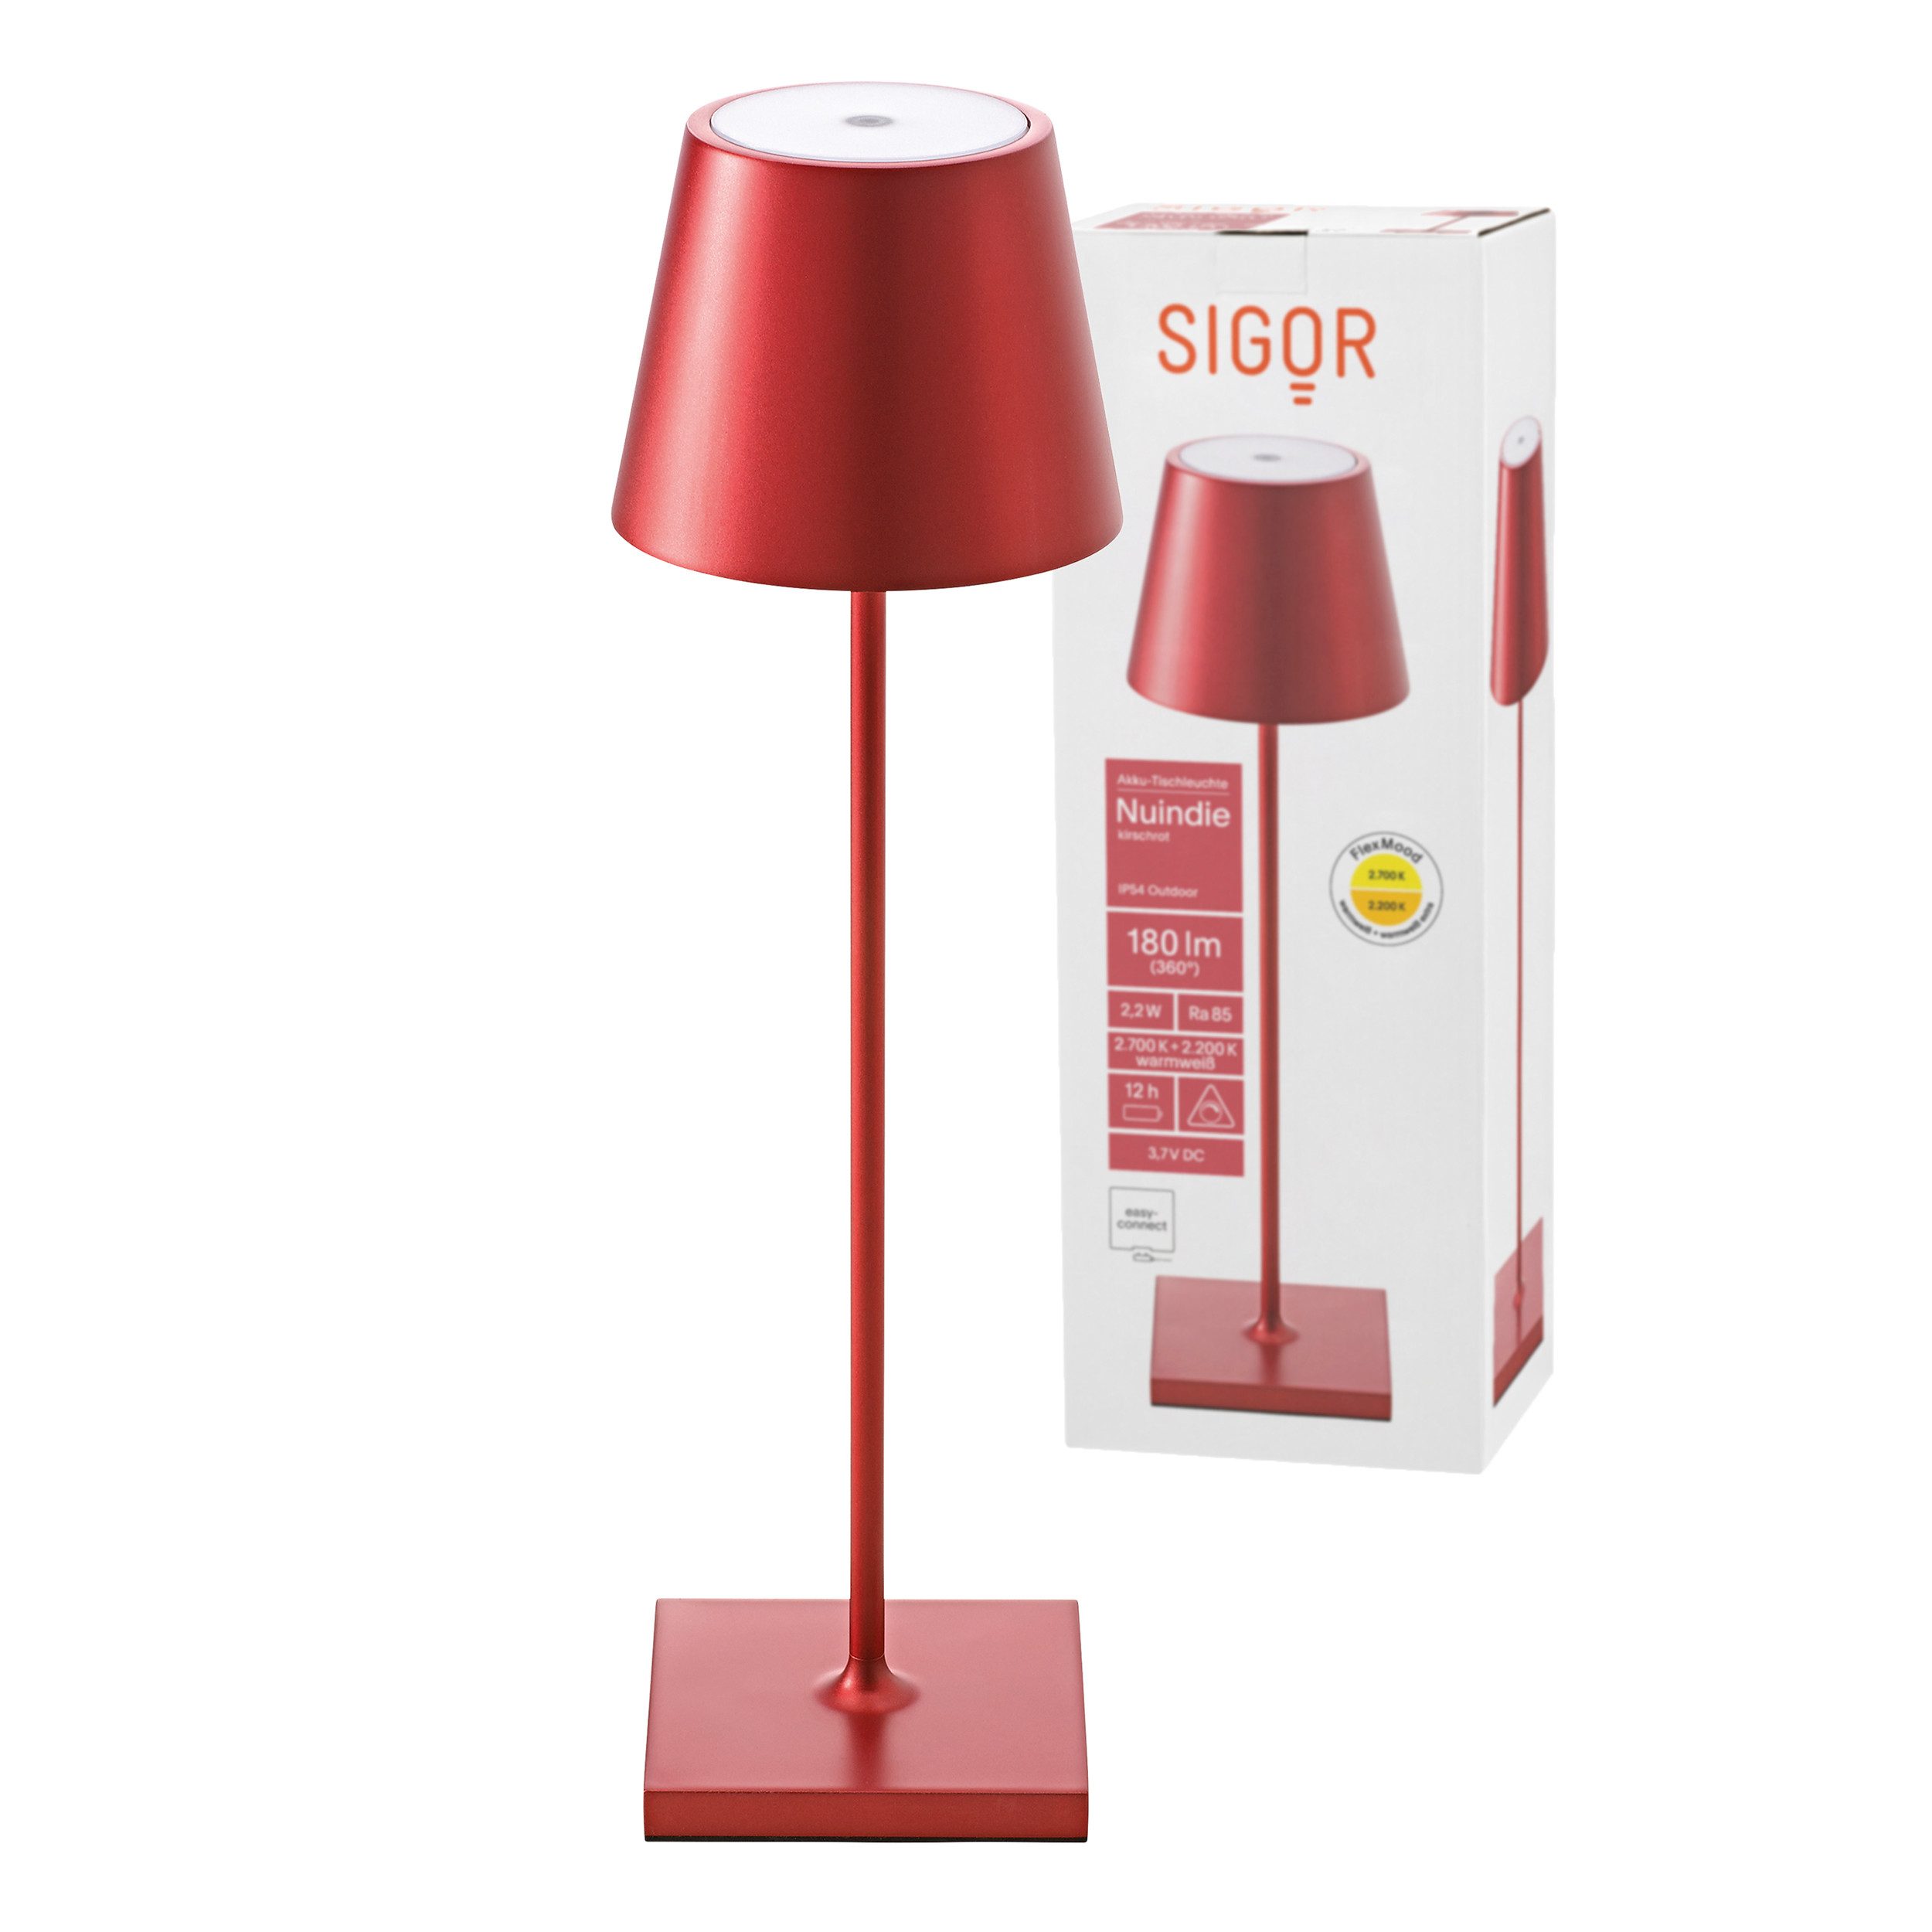 SIGOR LED Tischleuchte Stilvolle Akku-Tischlampe Nuindie Eloxiert, LED fest integriert, Warmweiß, Extra-Warmweiß, kabellose Tischleuchte, 38x10x10 cm